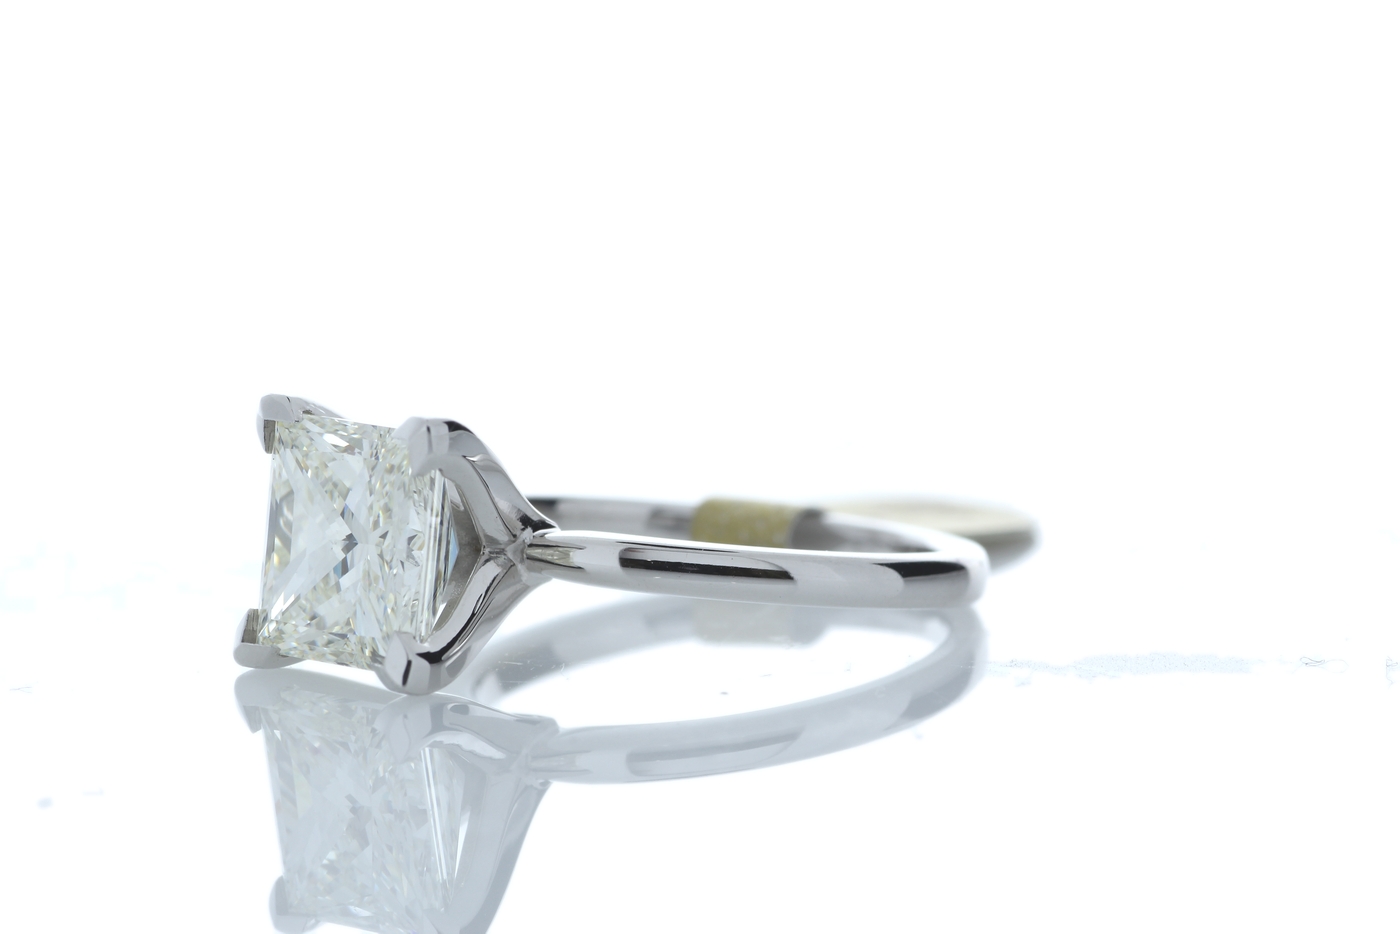 18ct White Gold Princess Cut Diamond Ring 3.09 Carats - Image 2 of 4